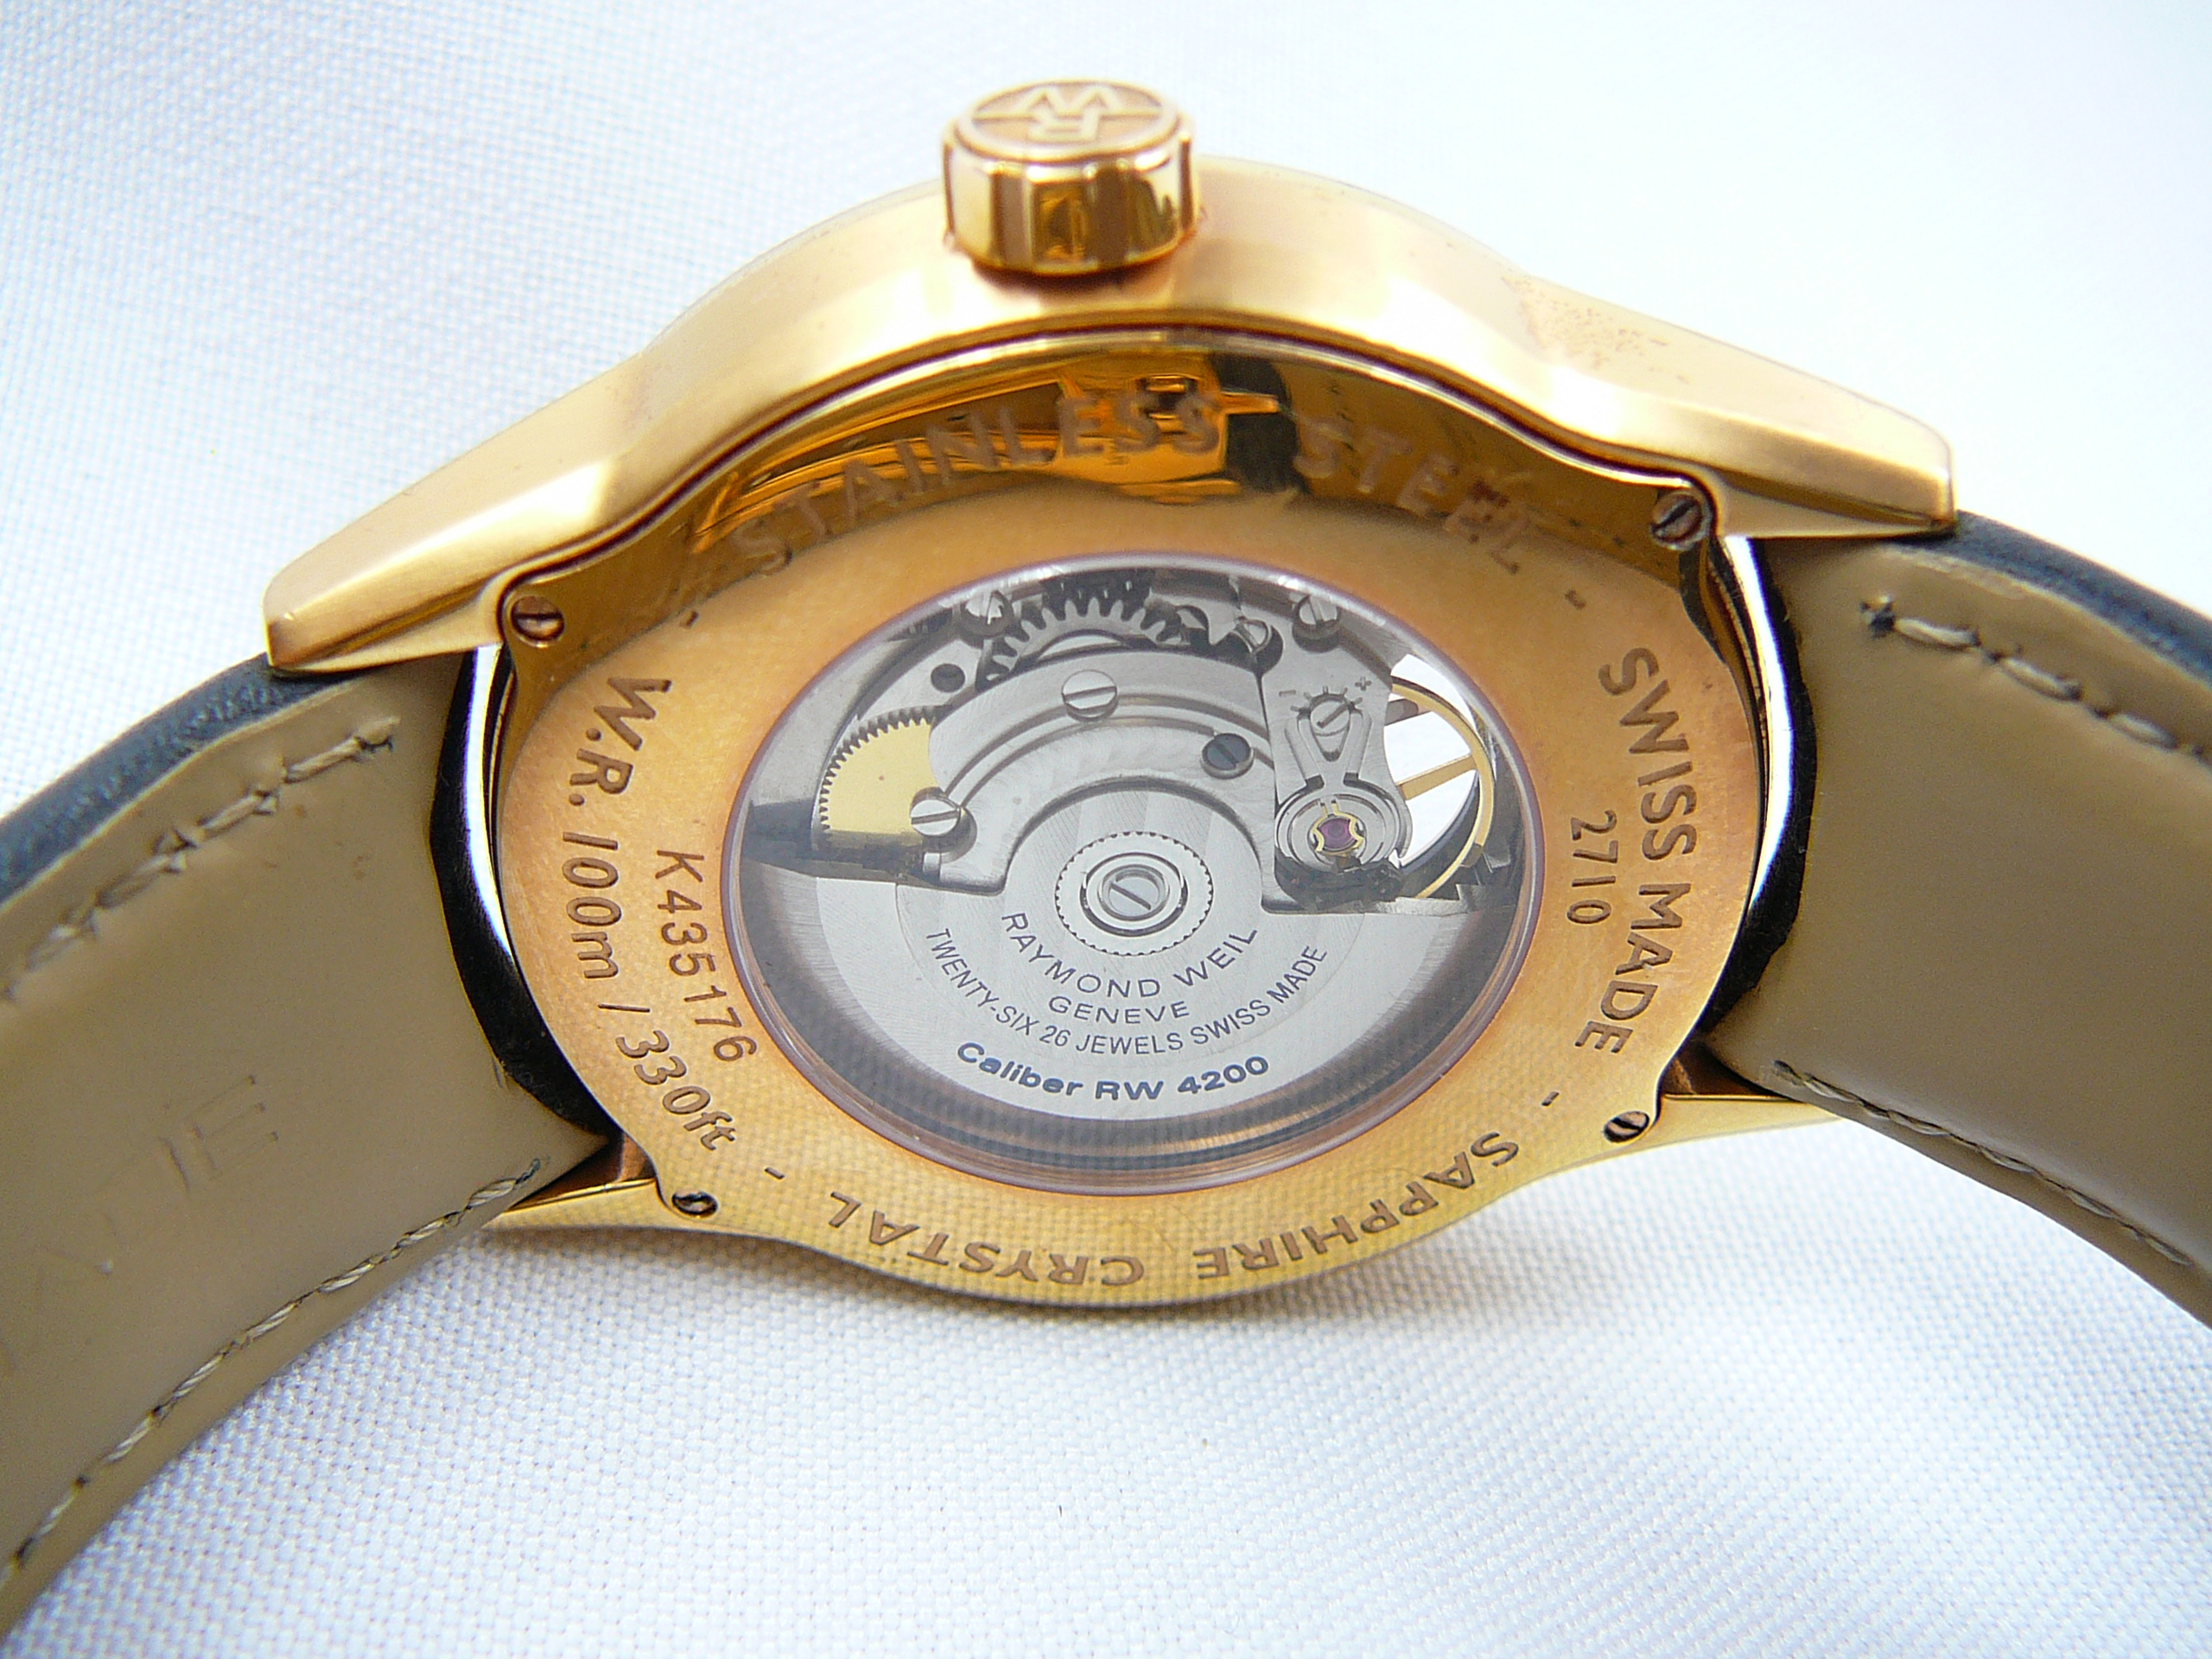 Gents Raymond Weil wrist watch - Image 3 of 3